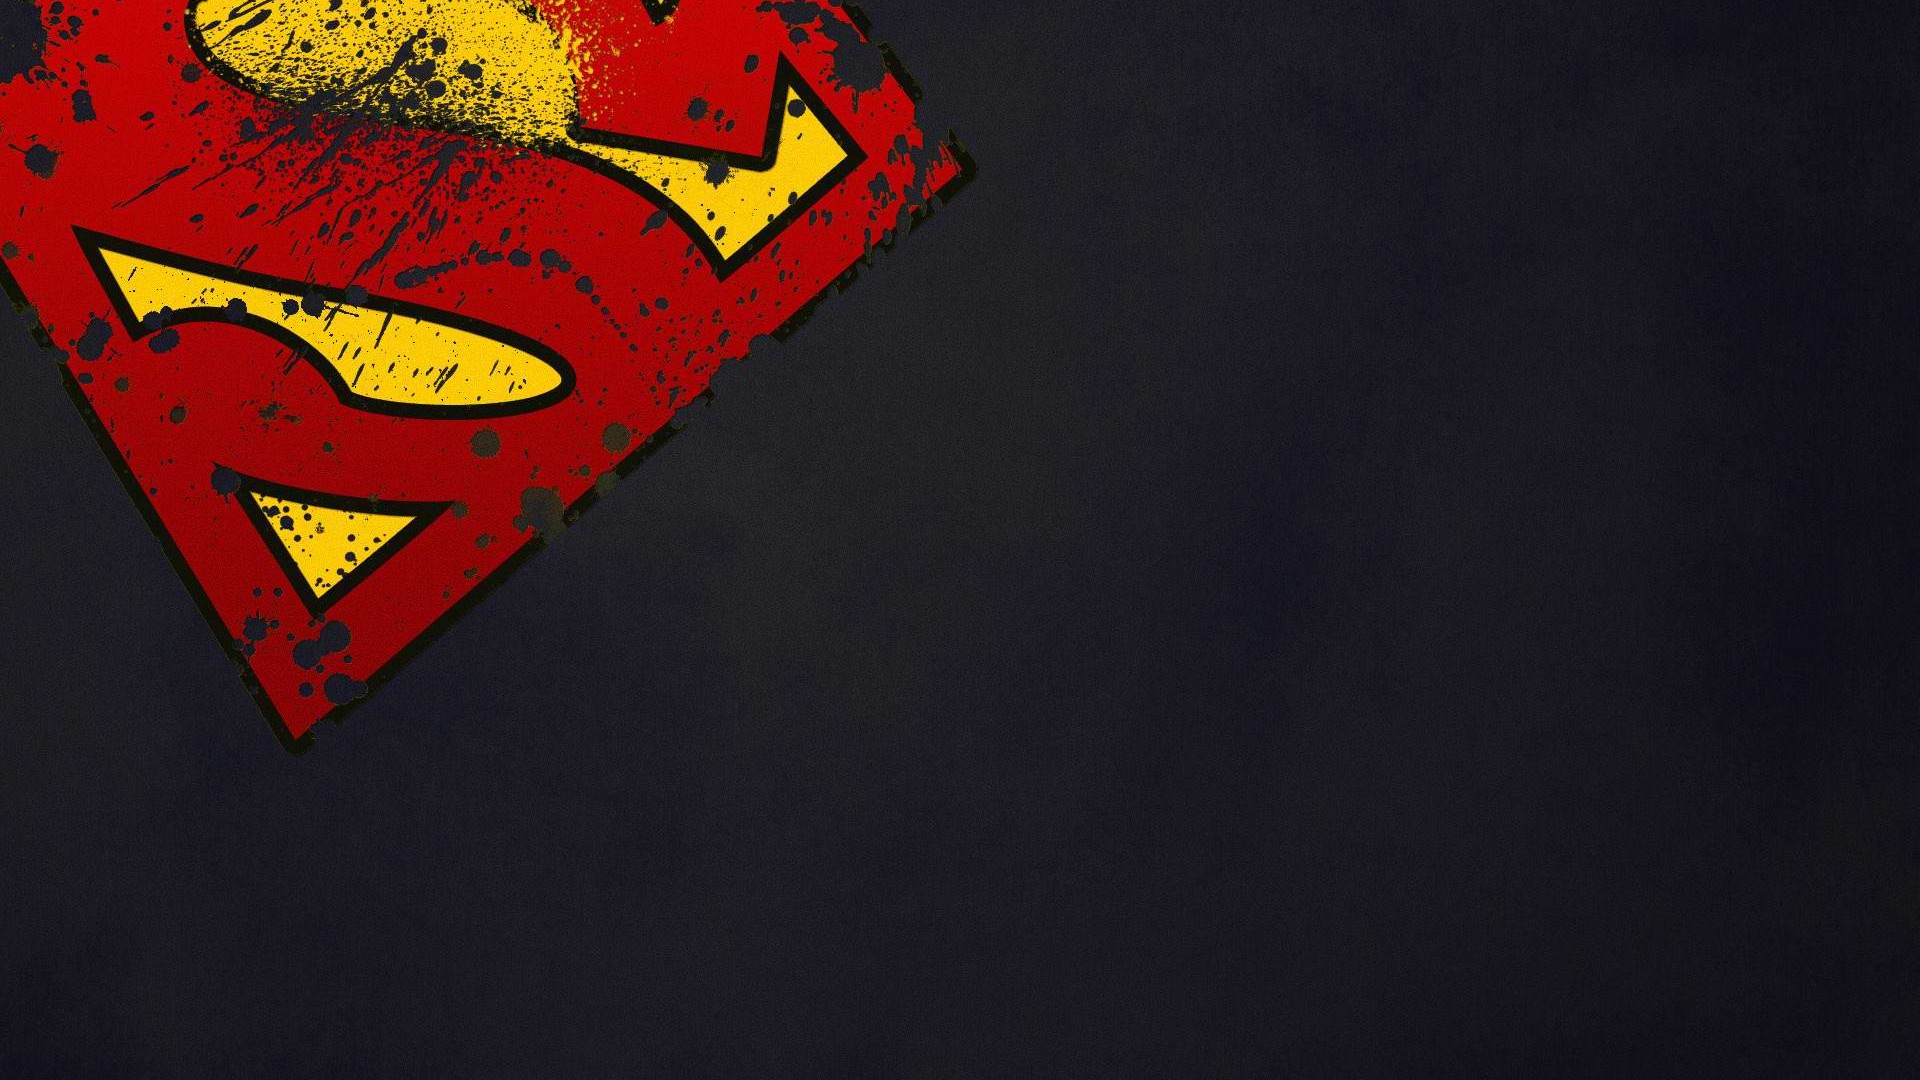 HD壁紙スーパーマンロゴ - スーパーマンのロゴの壁紙 - 1920x1200 - WallpaperTip